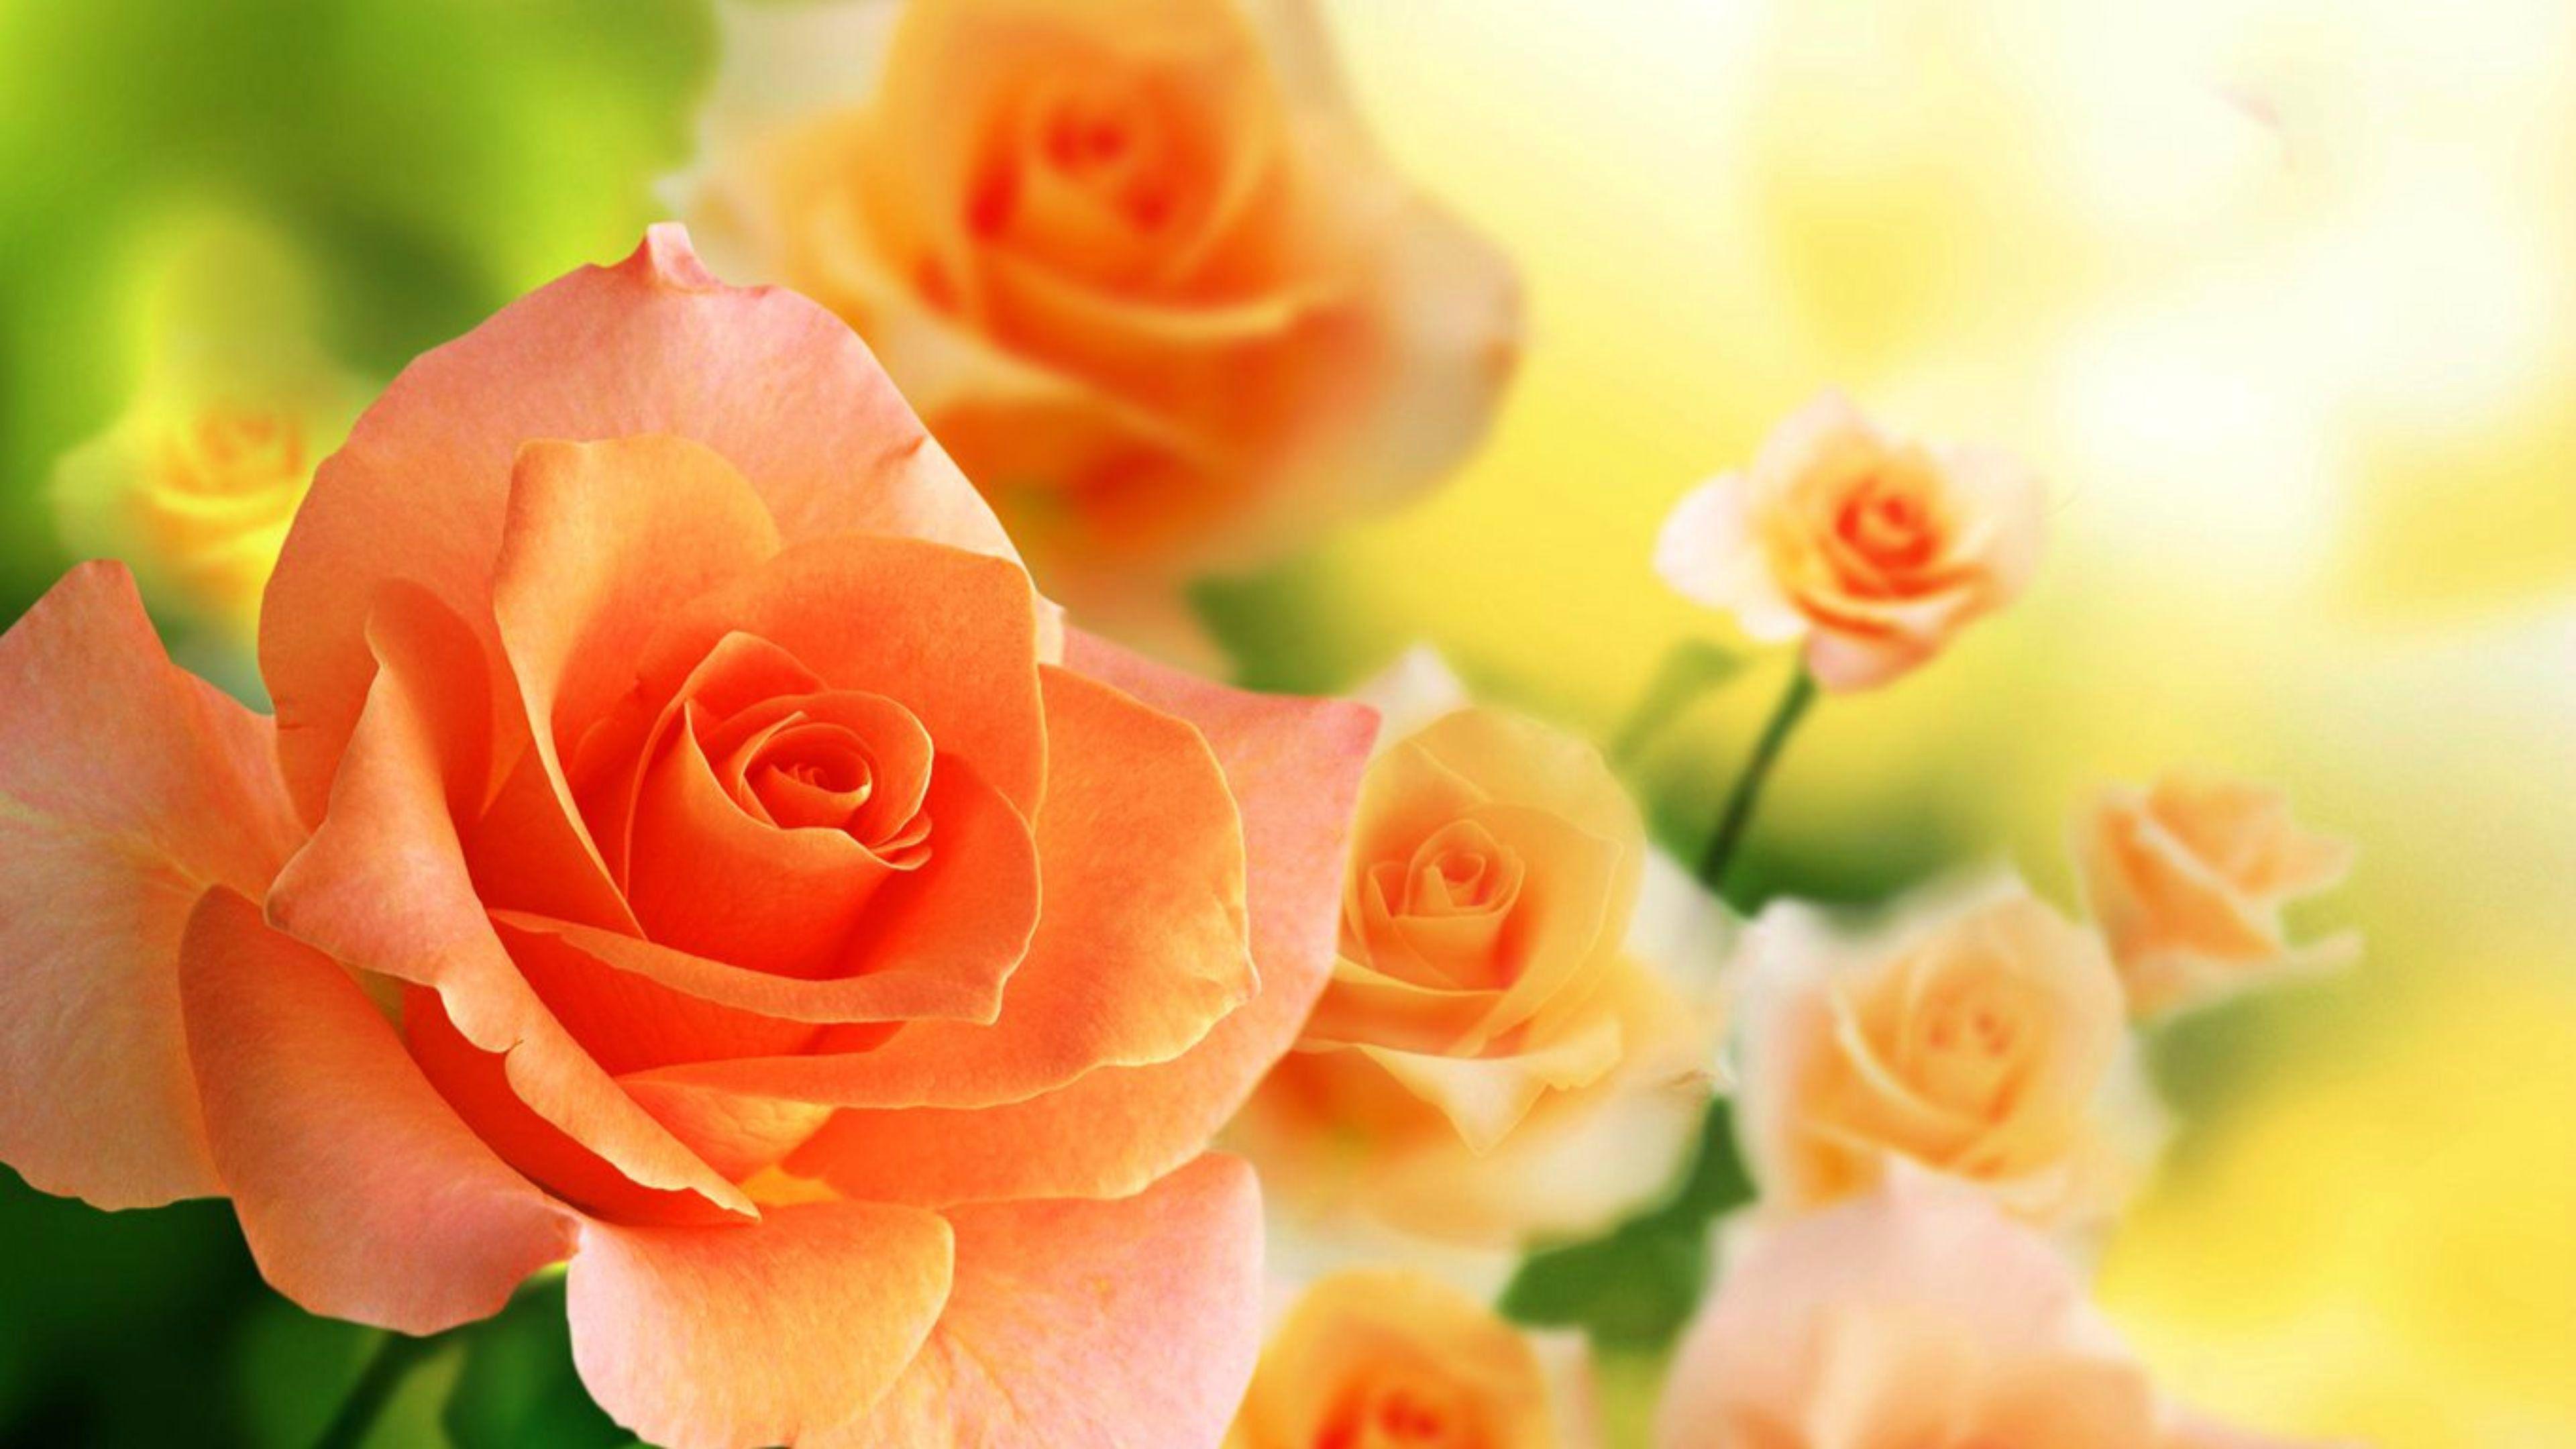 Most Flower Wallpaper World Colourful HD Pics Desktop Orange Rose